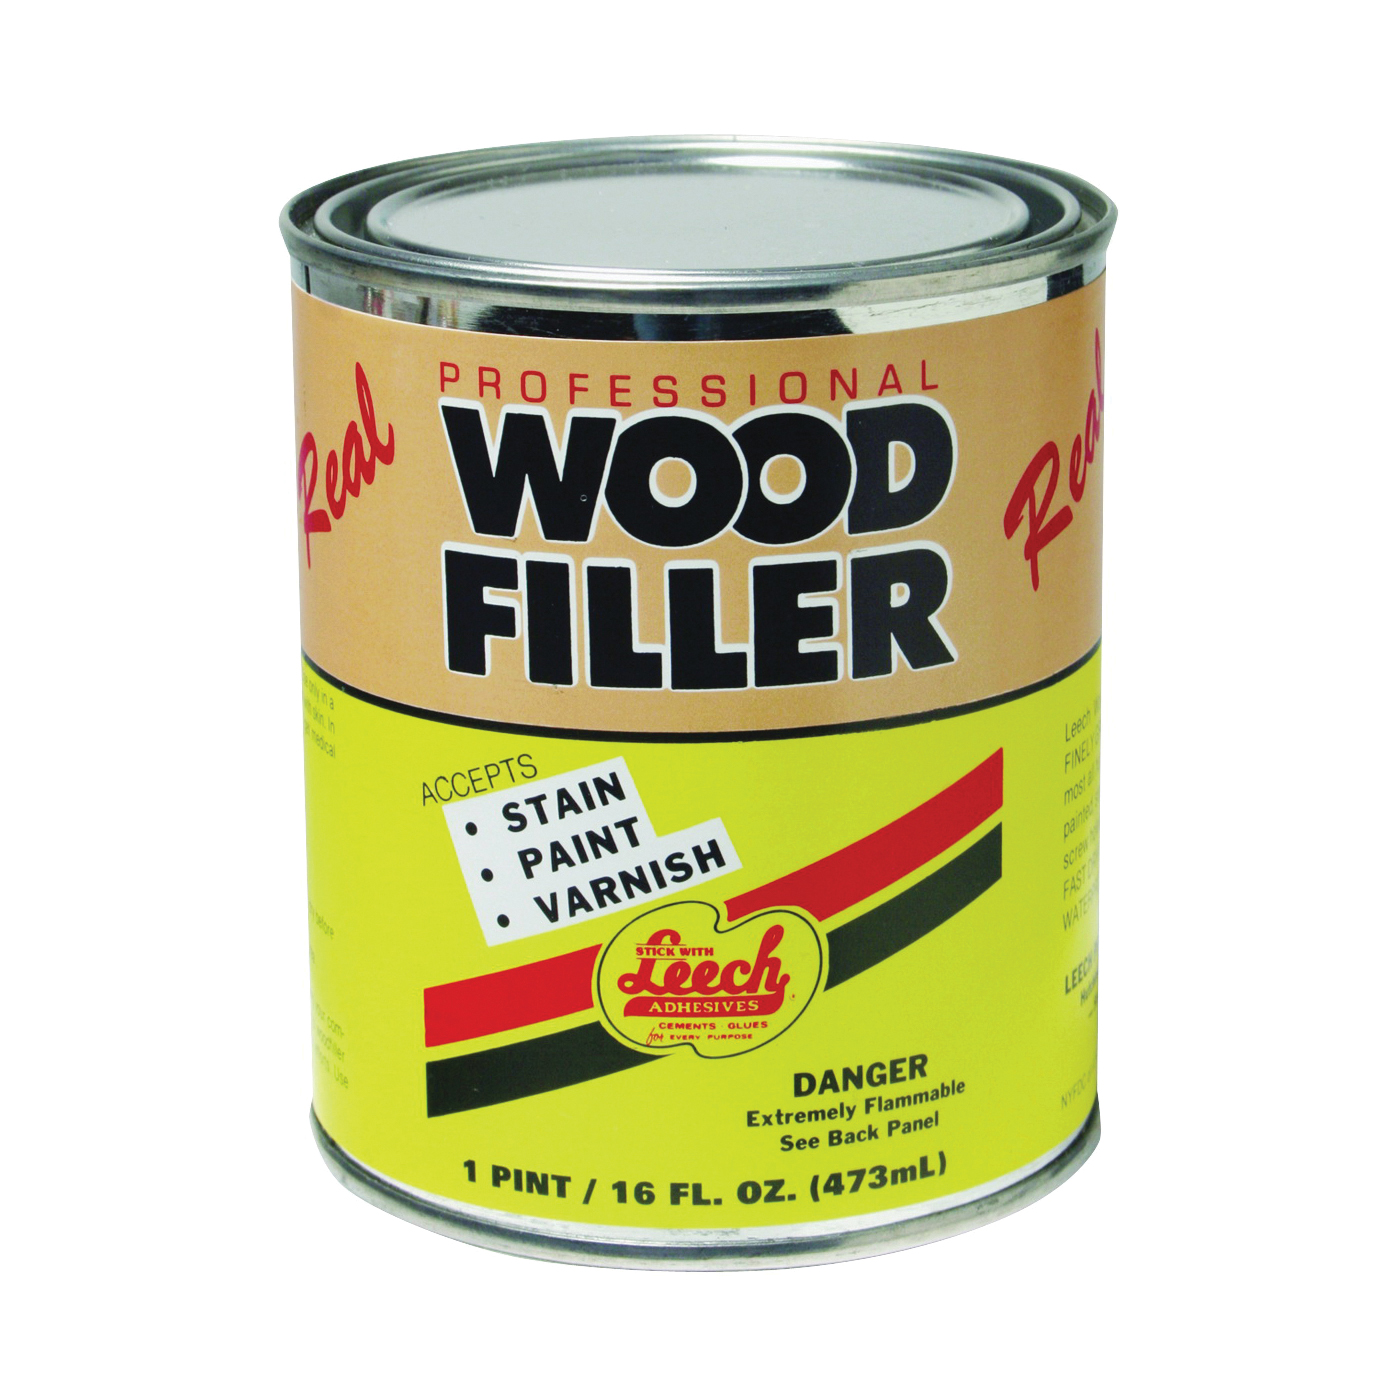 LWF-69 Wood Filler, Liquid, Solvent, Natural, 1 pt Can